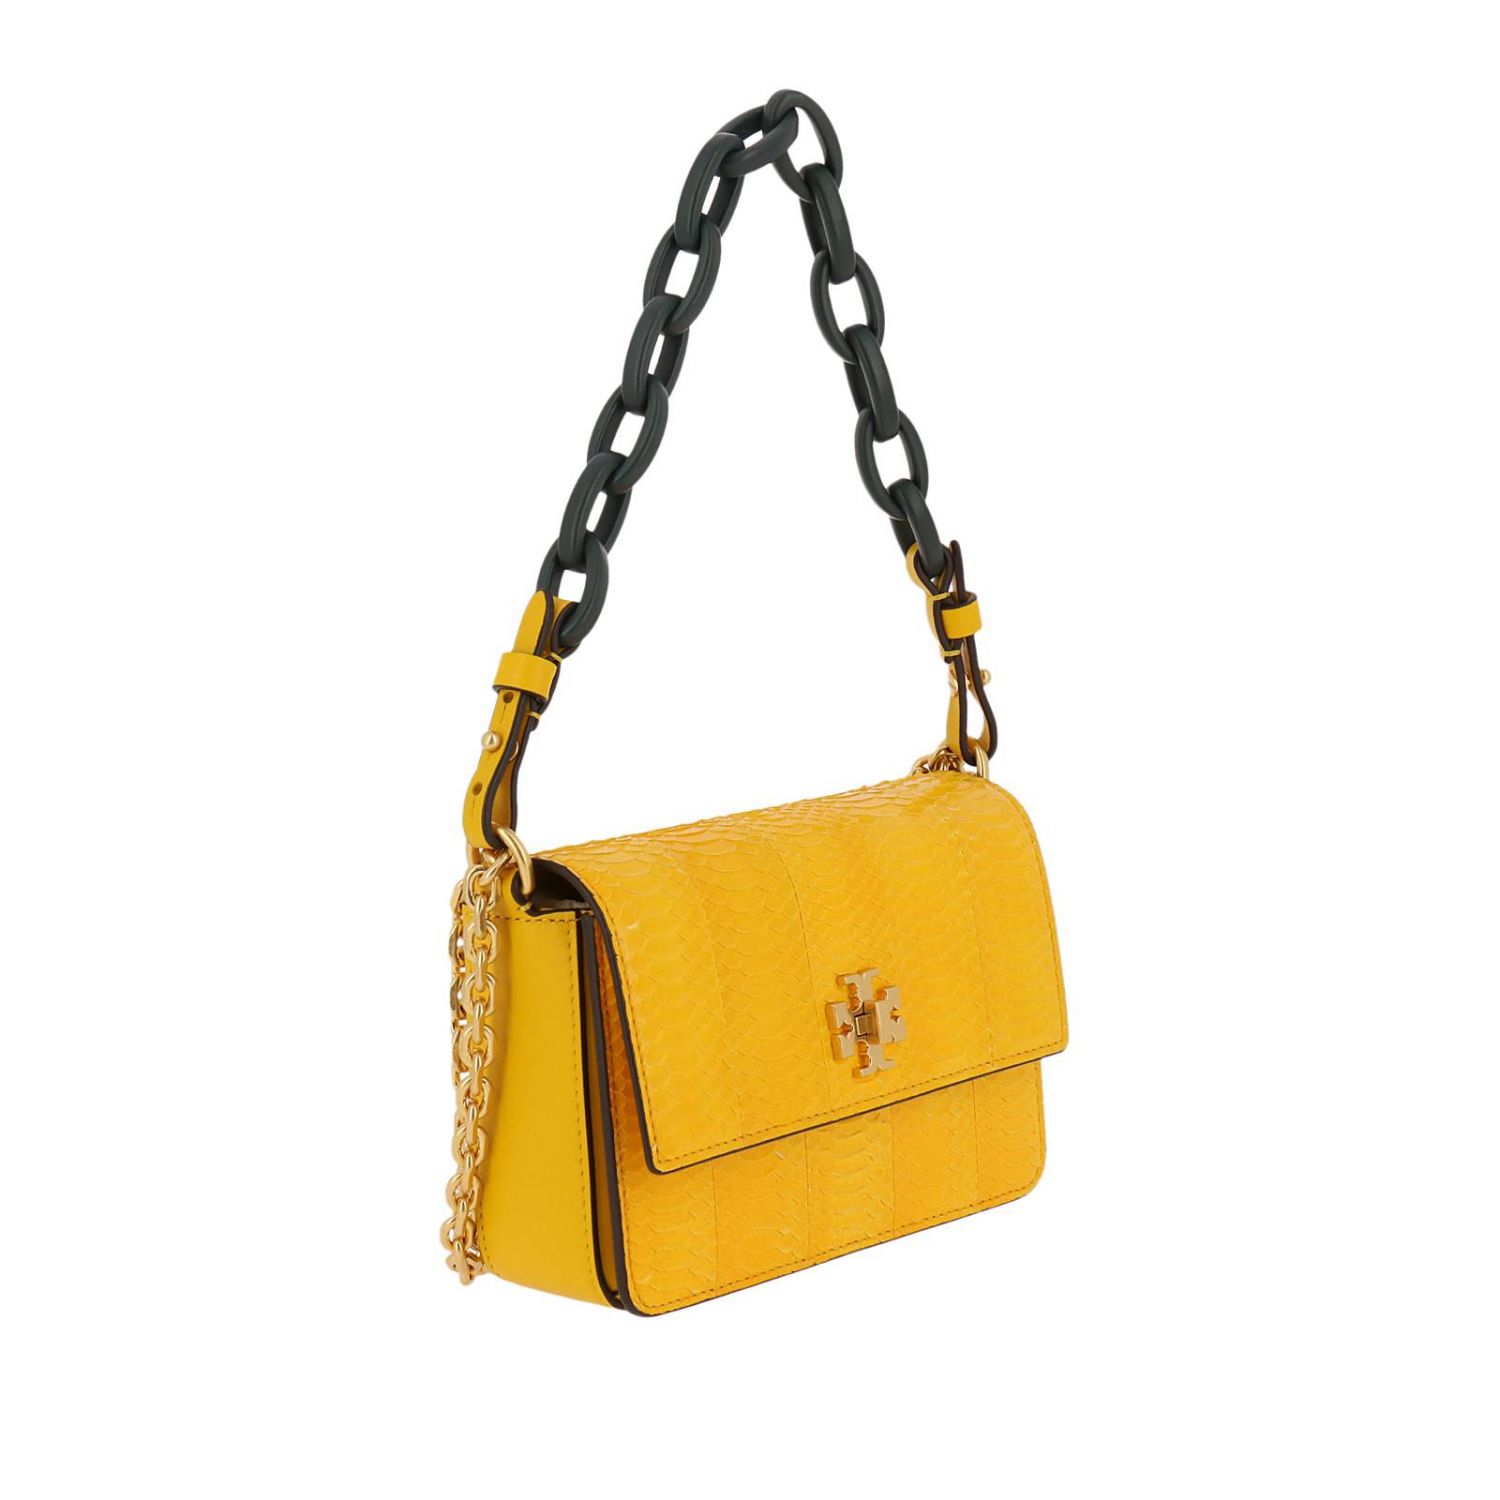 tory burch yellow handbag